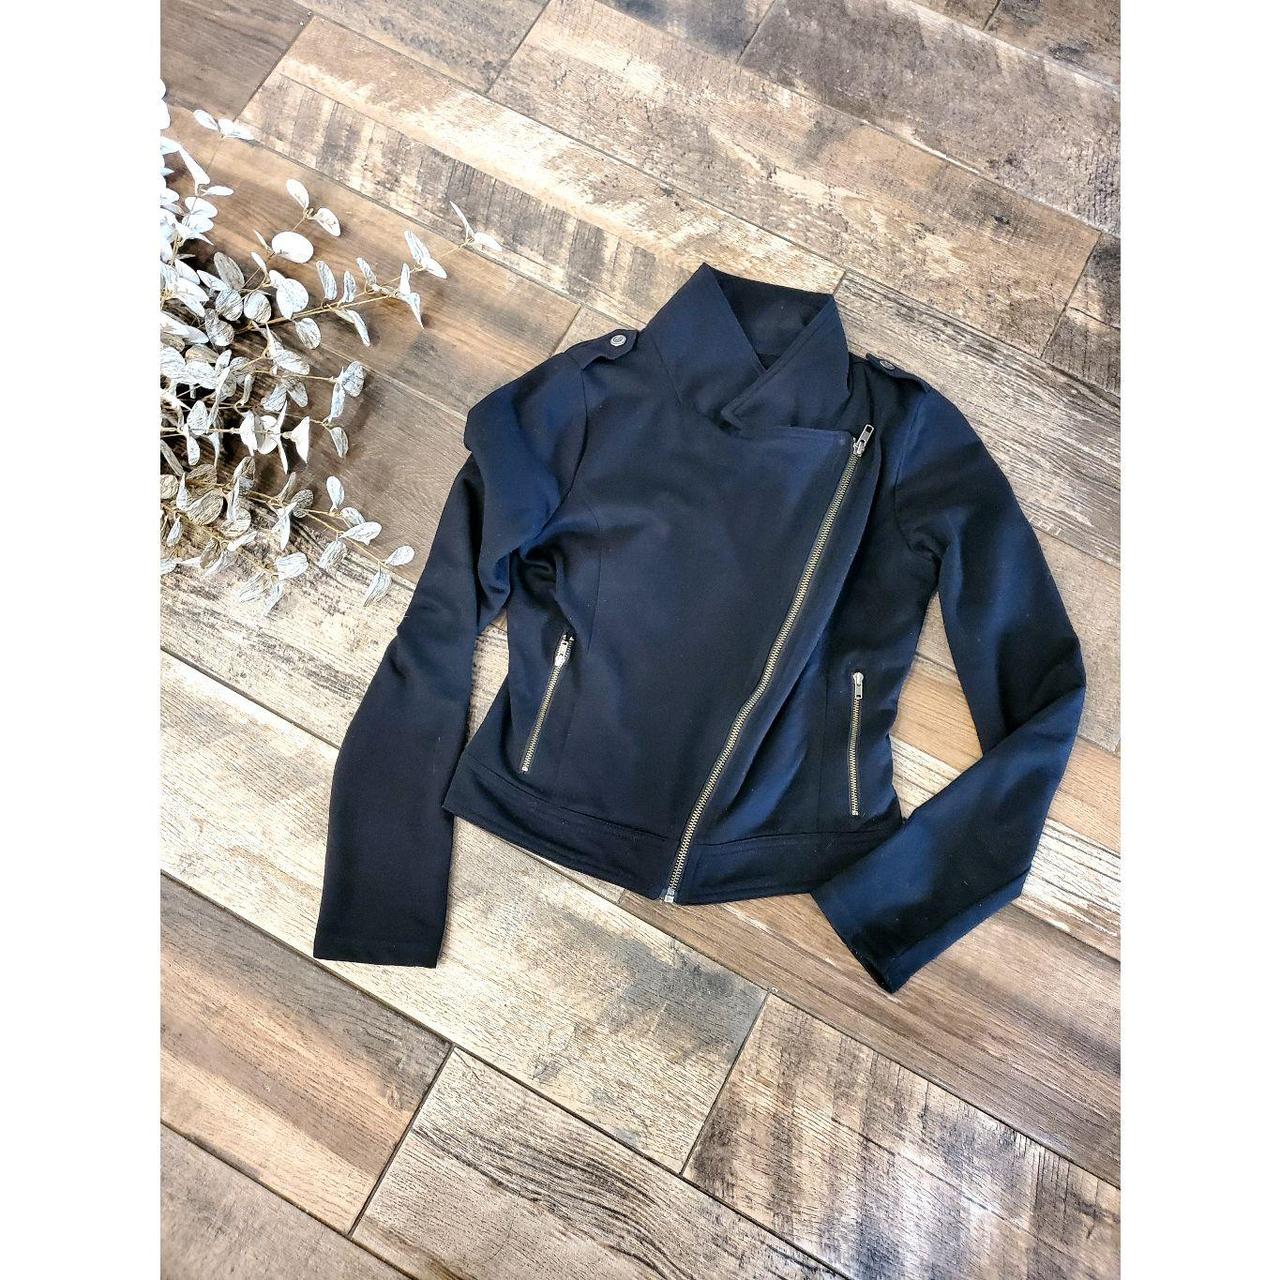 Product Image 1 - Black side zipper lightweight jacket